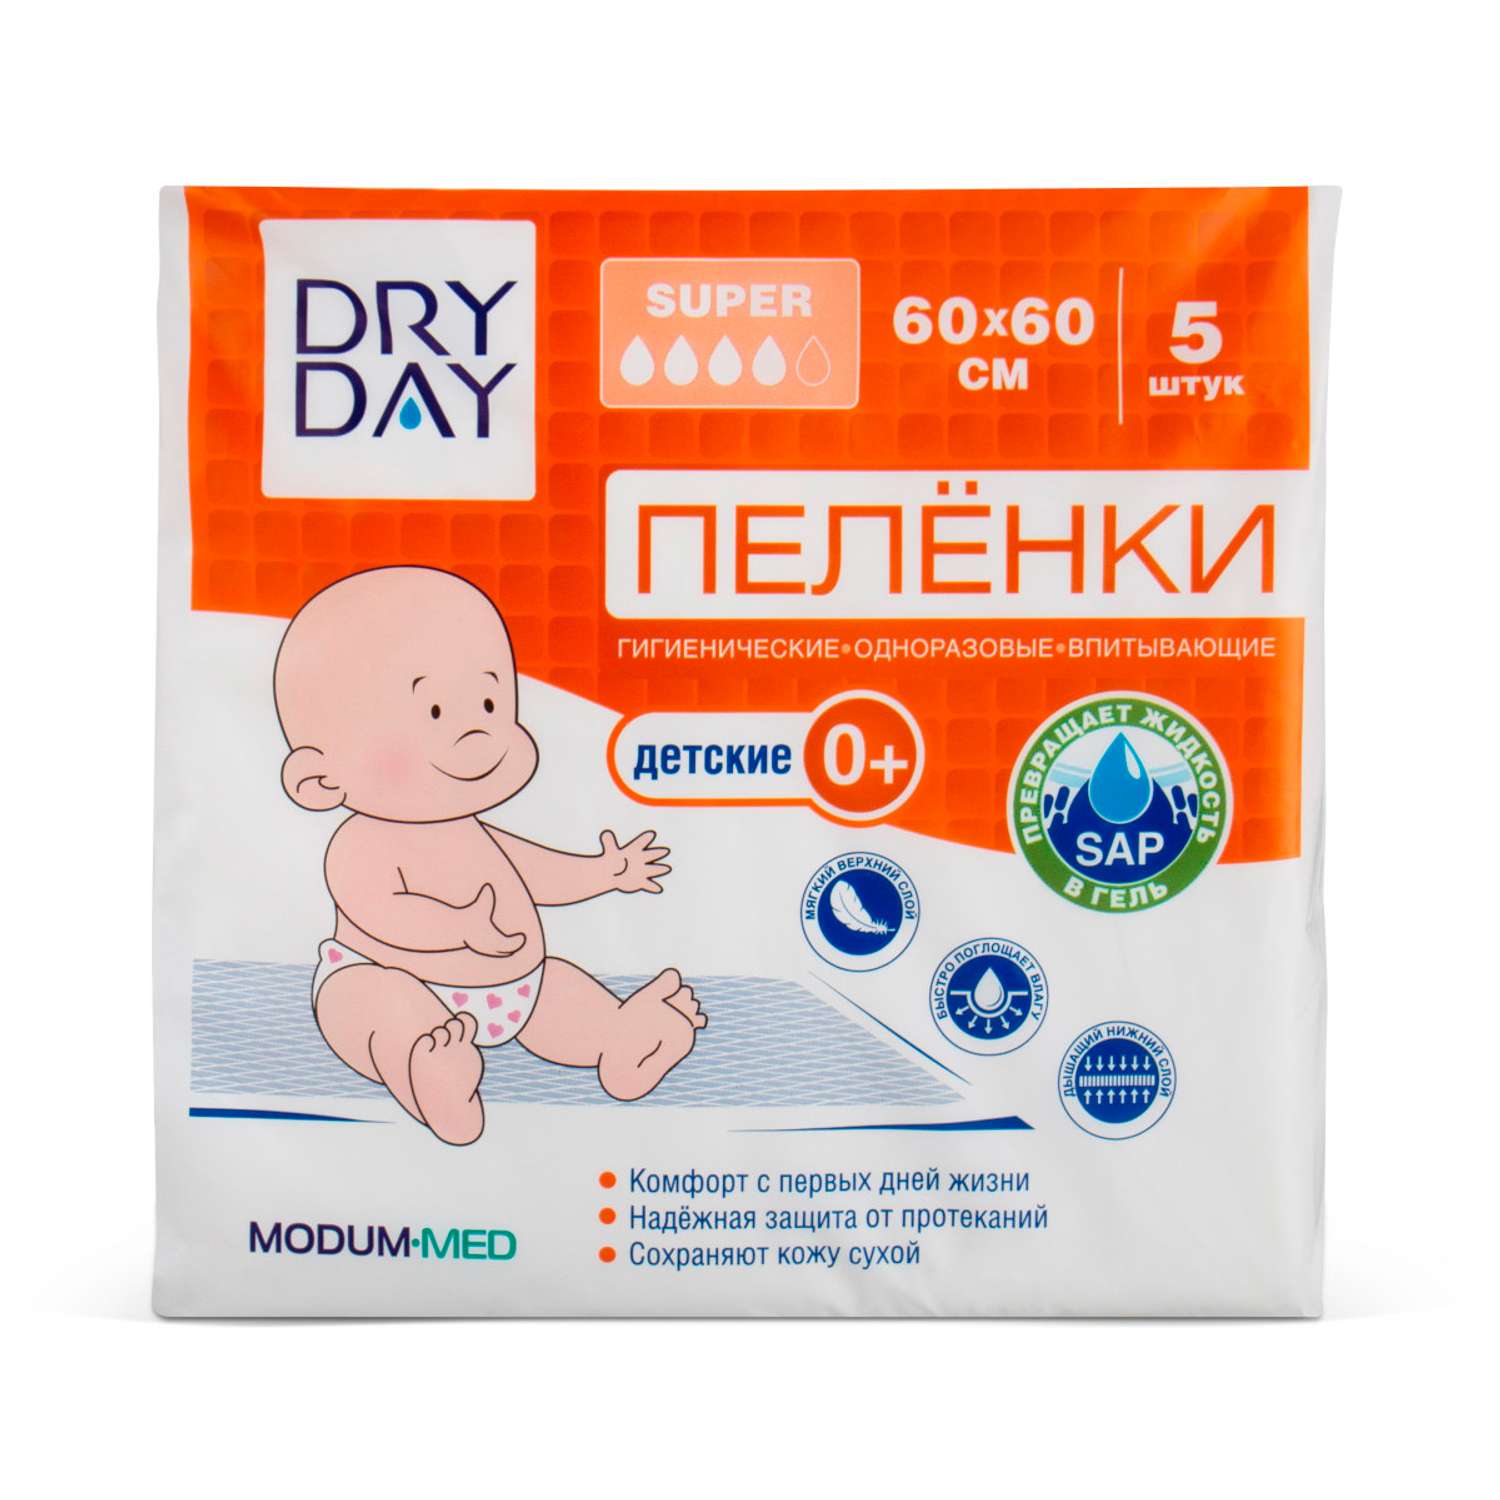 Пеленки одноразовые MODUM dry day детские 0+ super 60х60 5 шт - фото 1